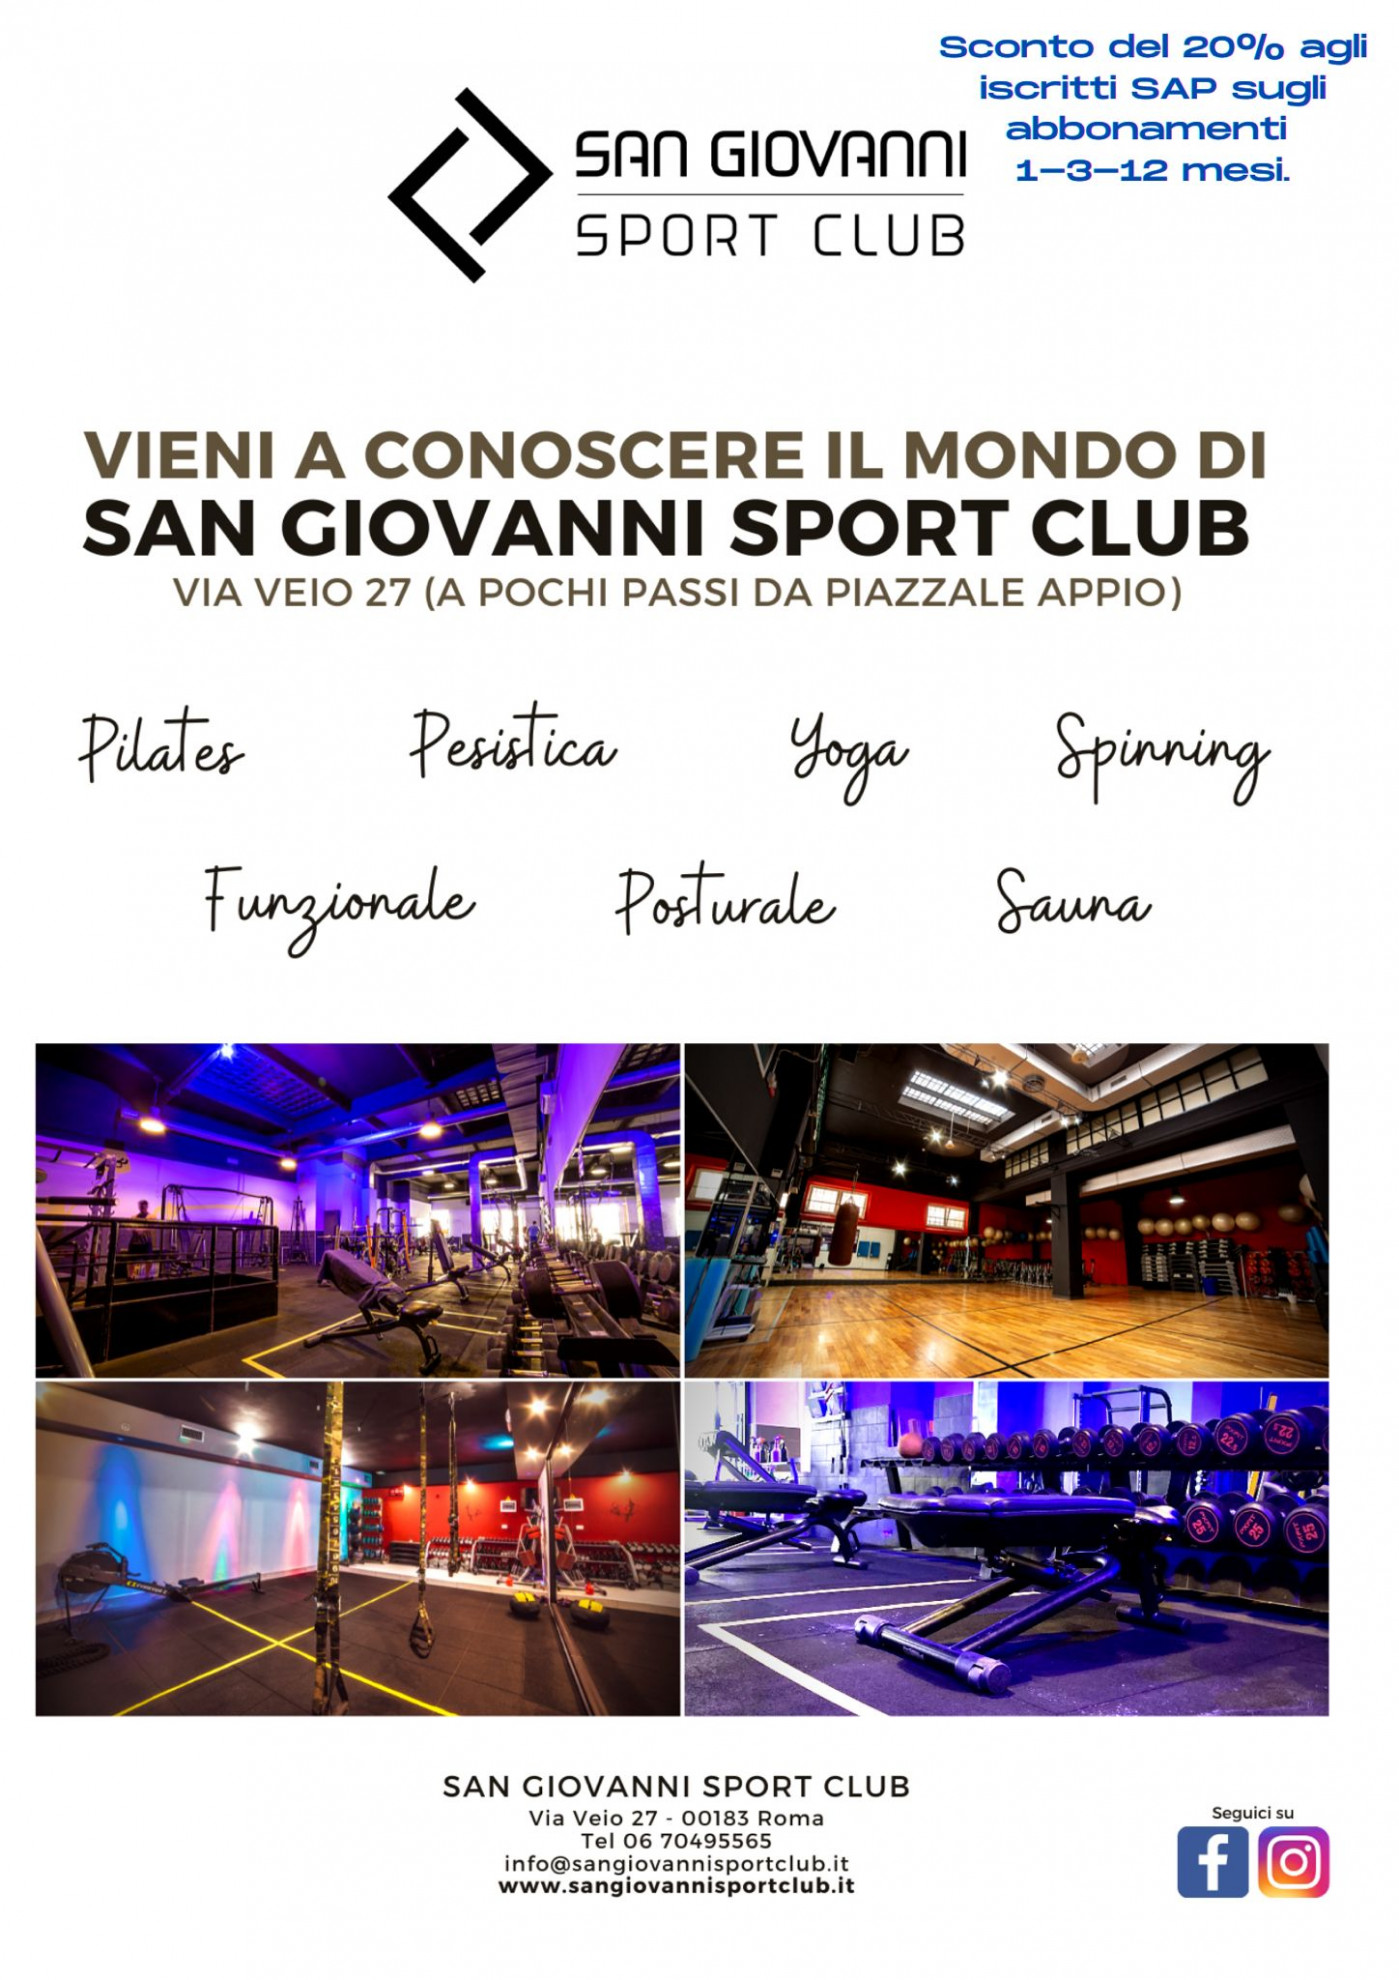 San Giovanni sport club